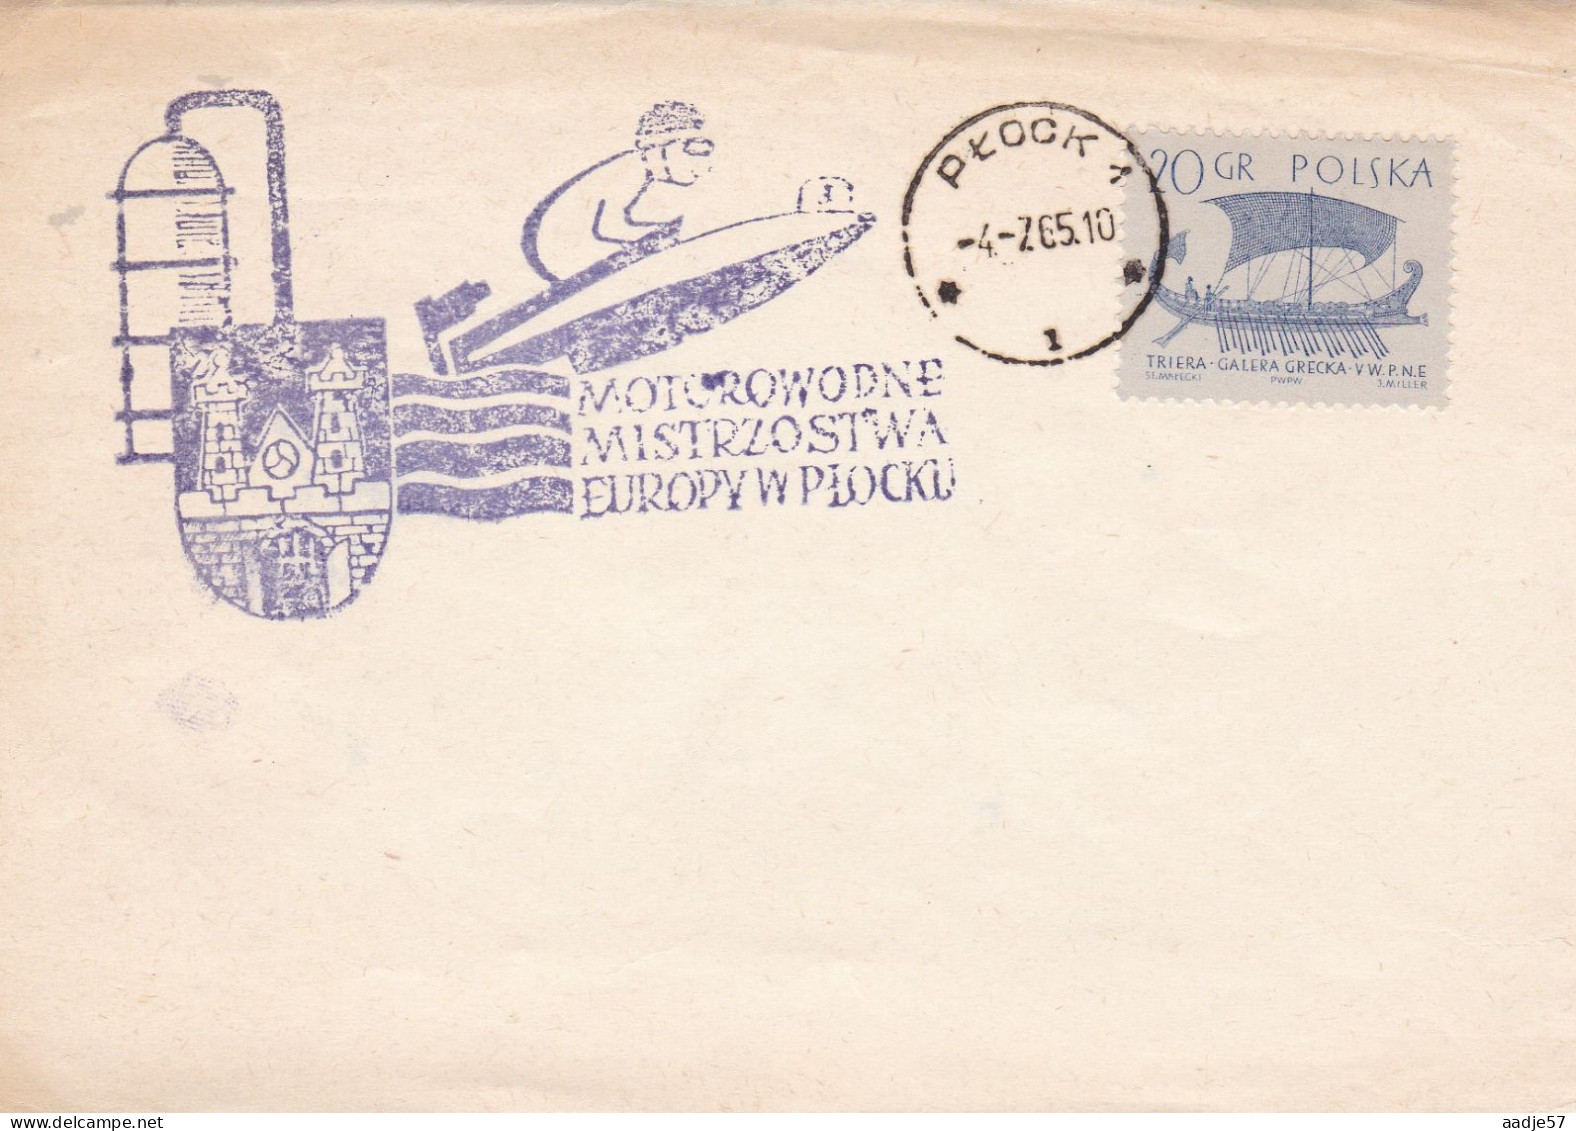 POLAND FDC POLOGNE 1965 Motorowodne Mistrzostwa Europa Ptock - Cartas & Documentos